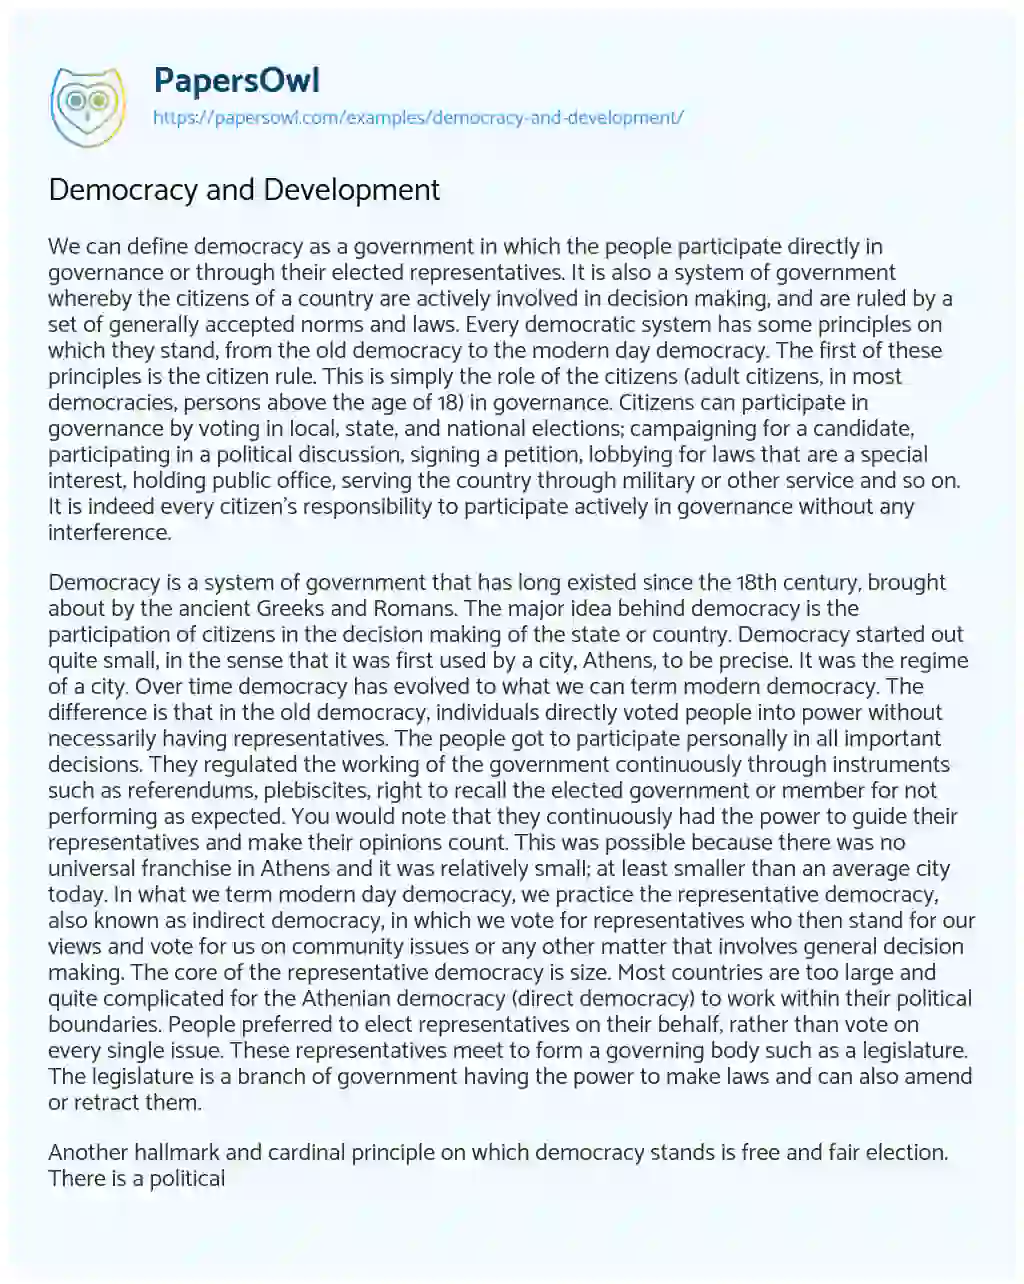 Essay on Democracy and Development